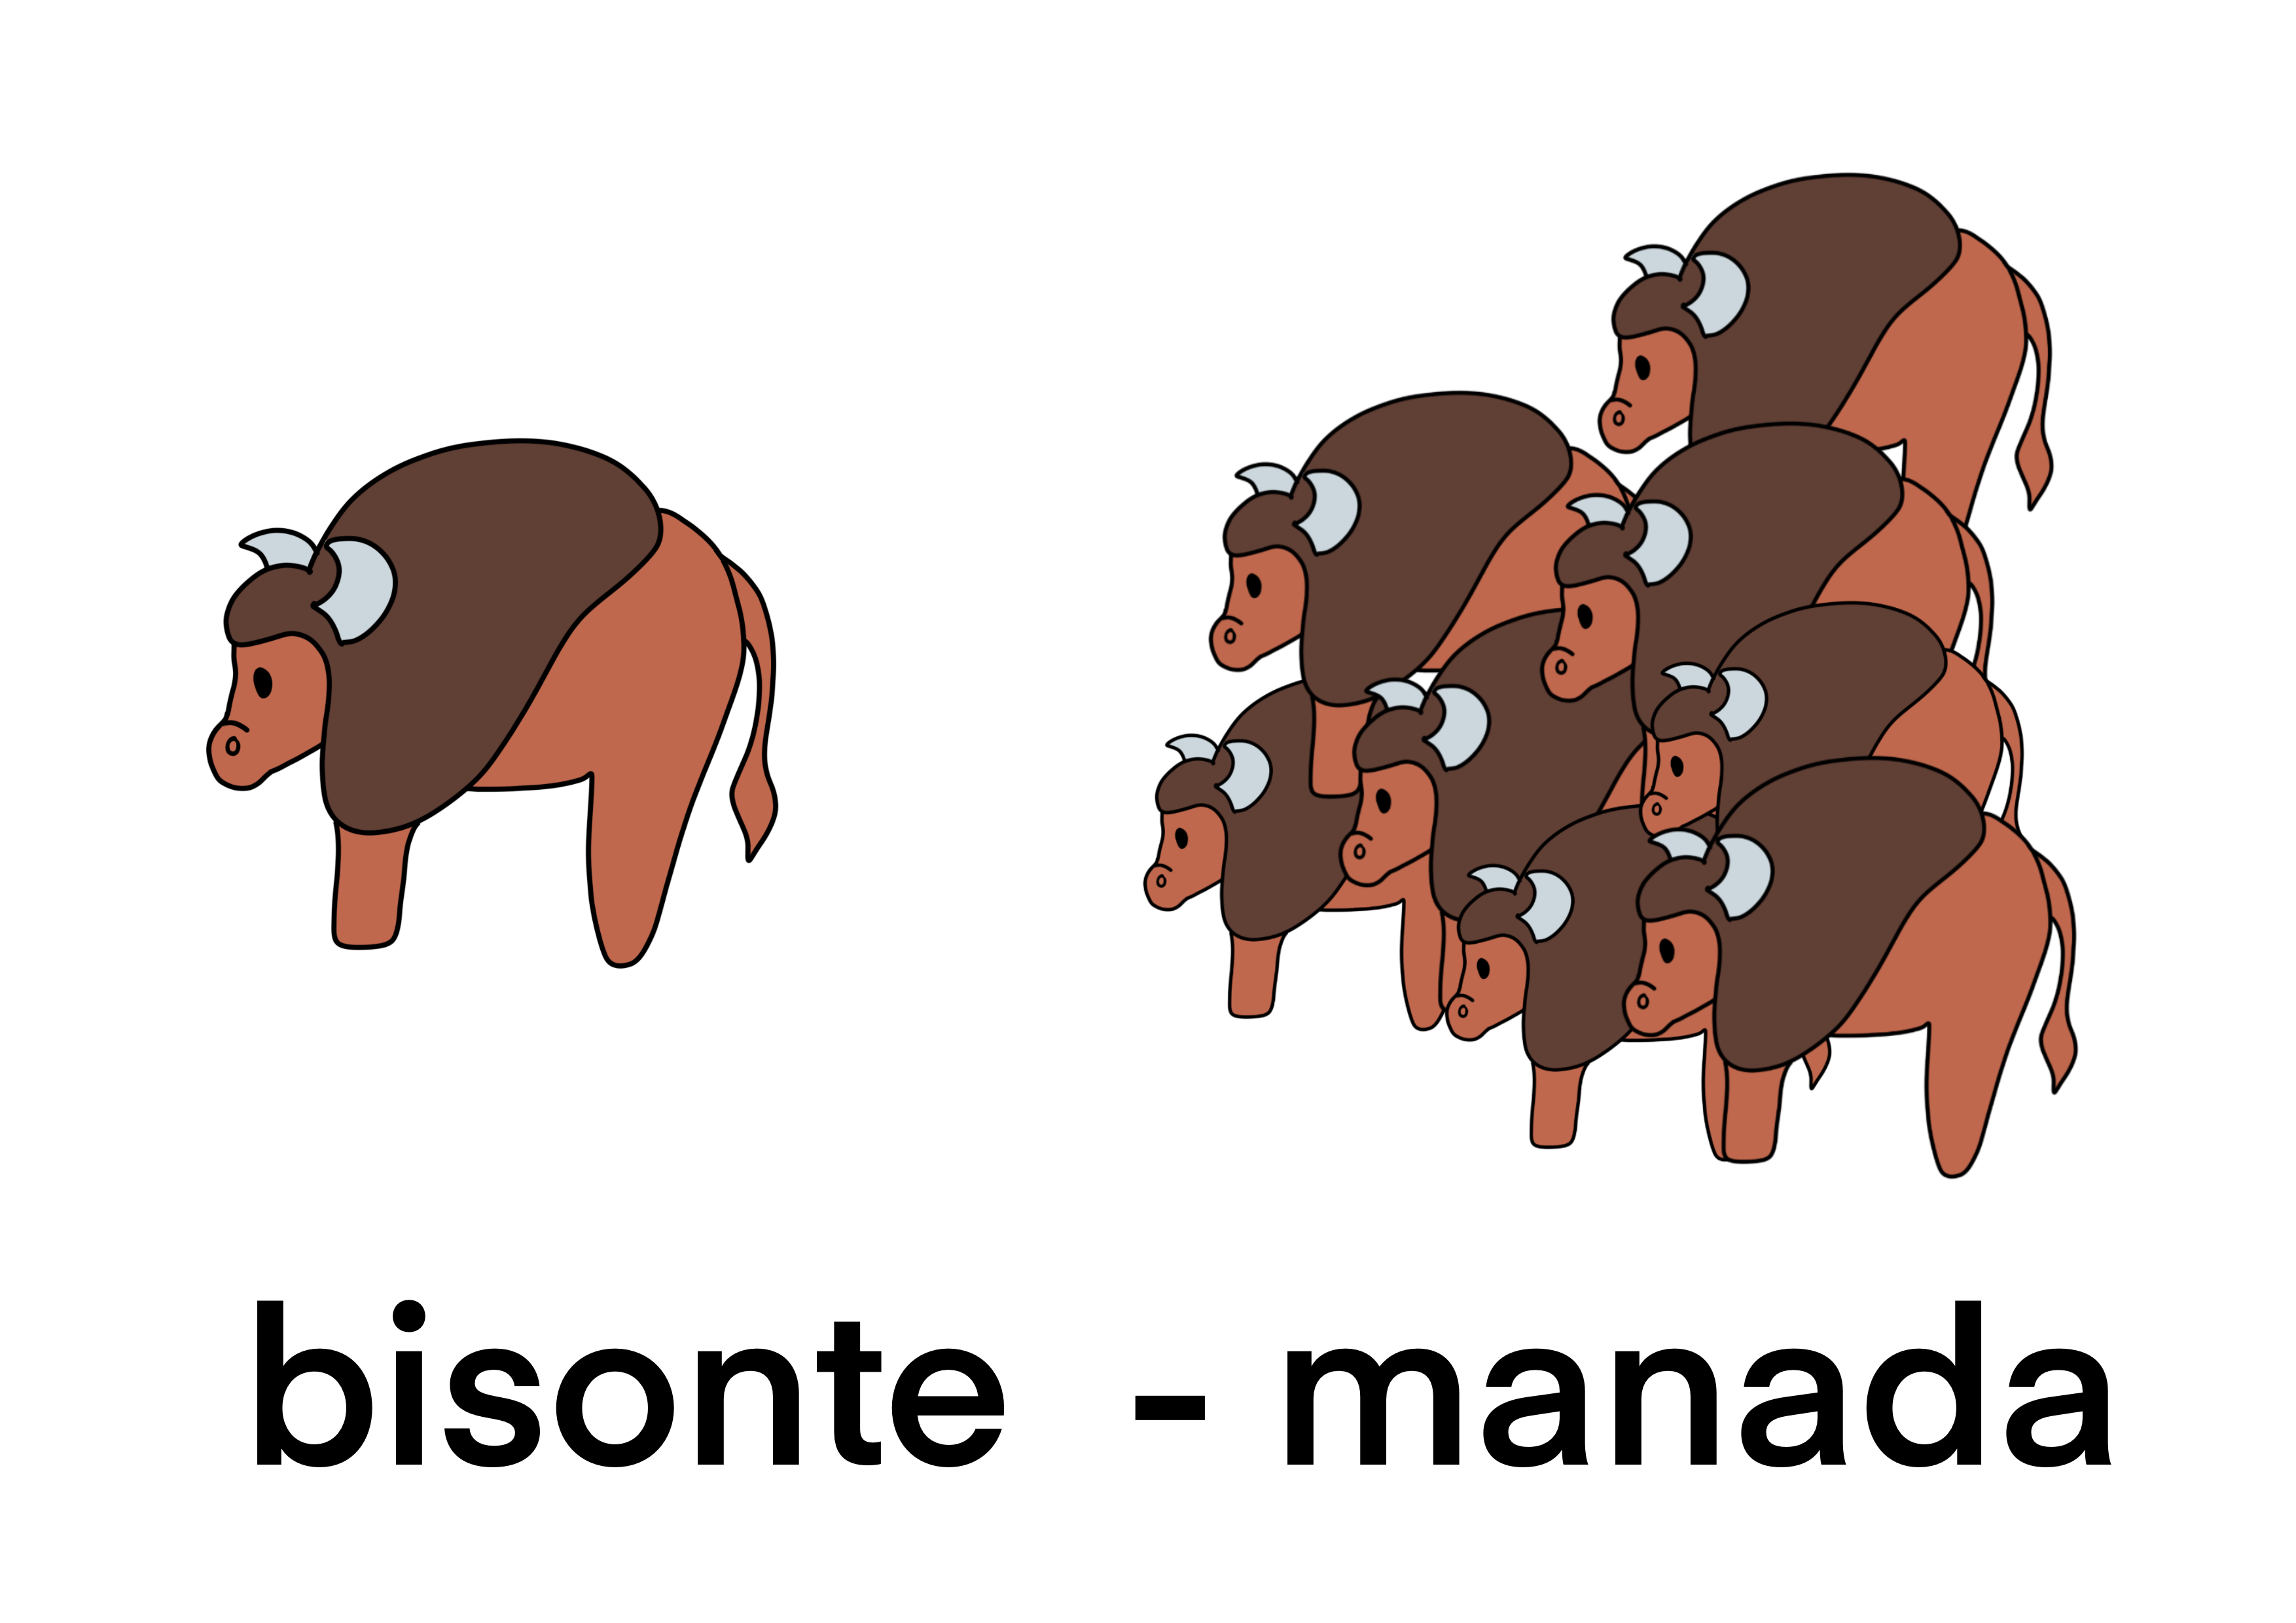 Bisonte - Manada